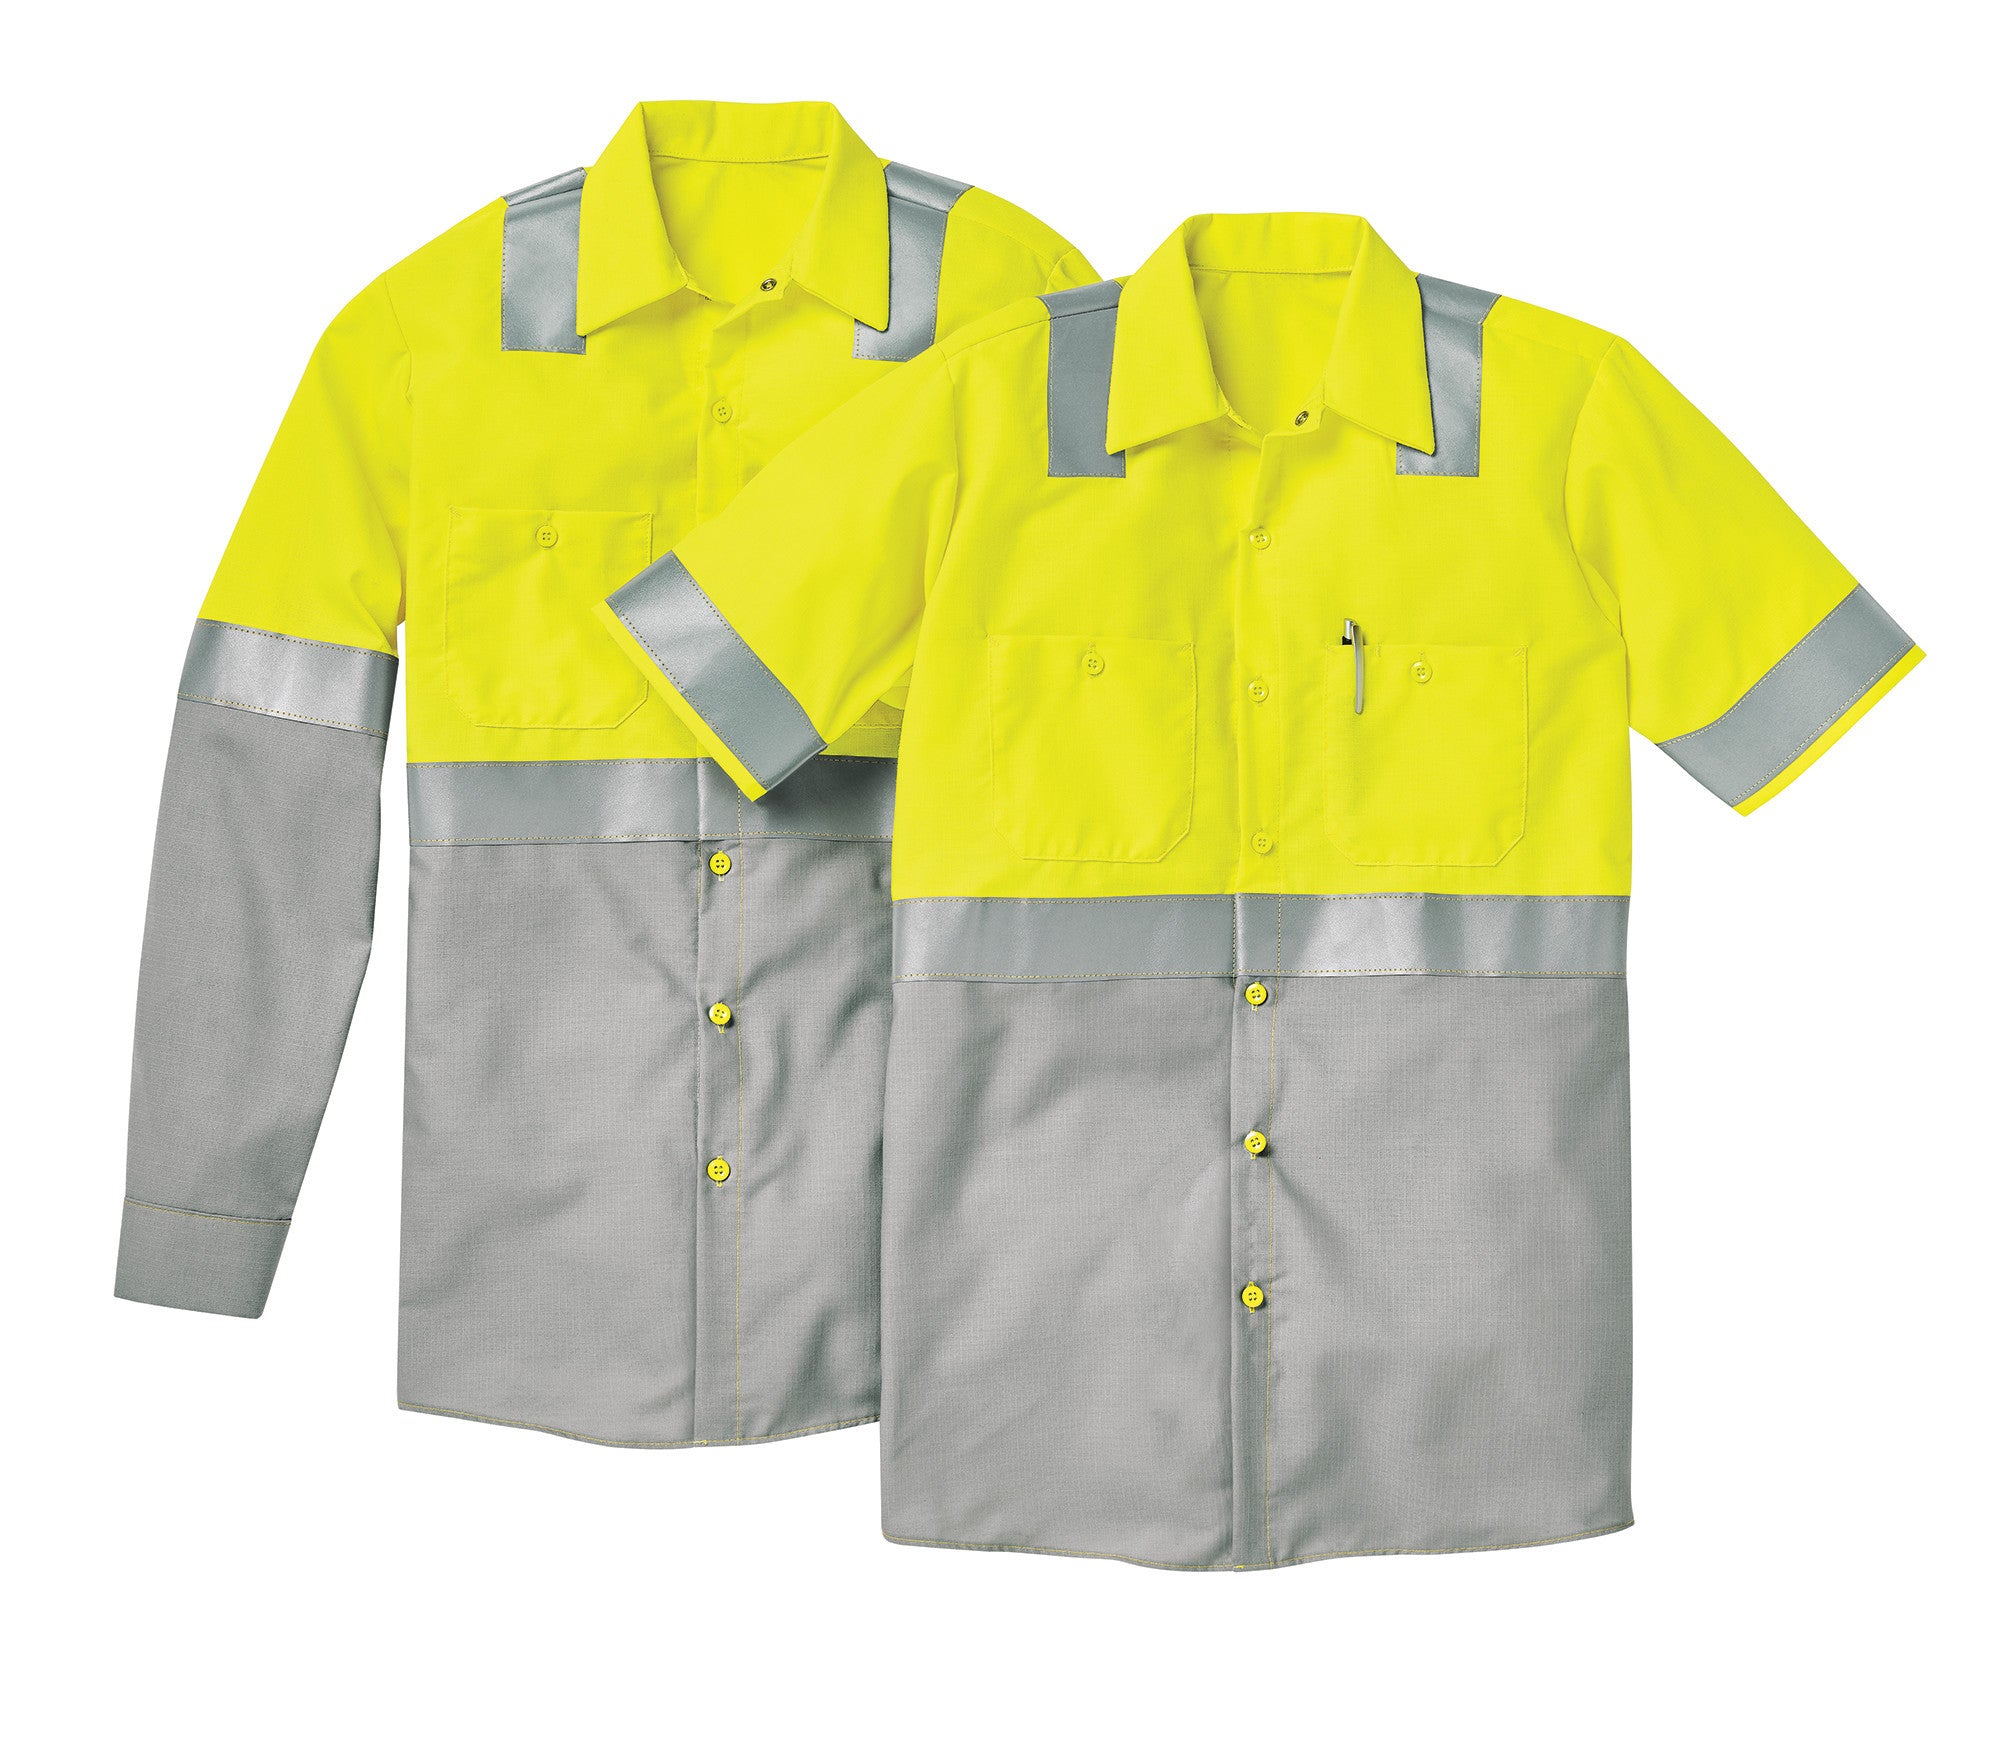 Red Kap Short Sleeve Hi-Visibility Color Block Work Shirt: Class 2 Level 2 - SY24